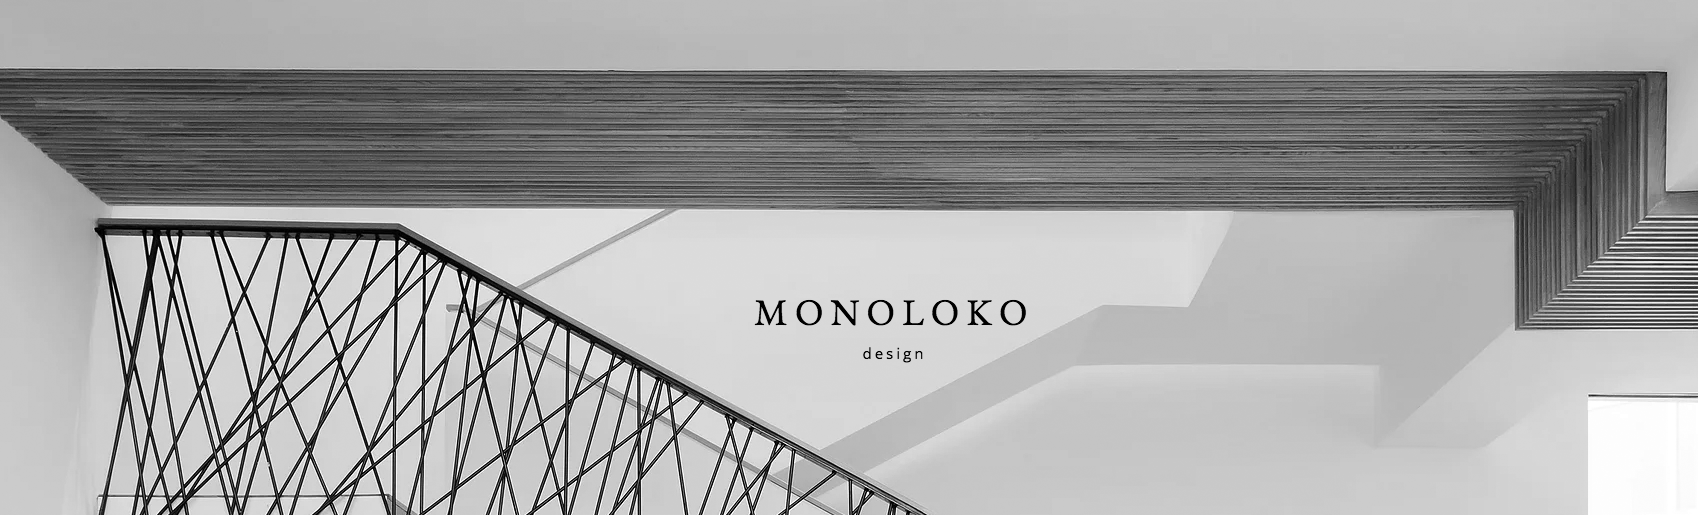 Monoloko Design